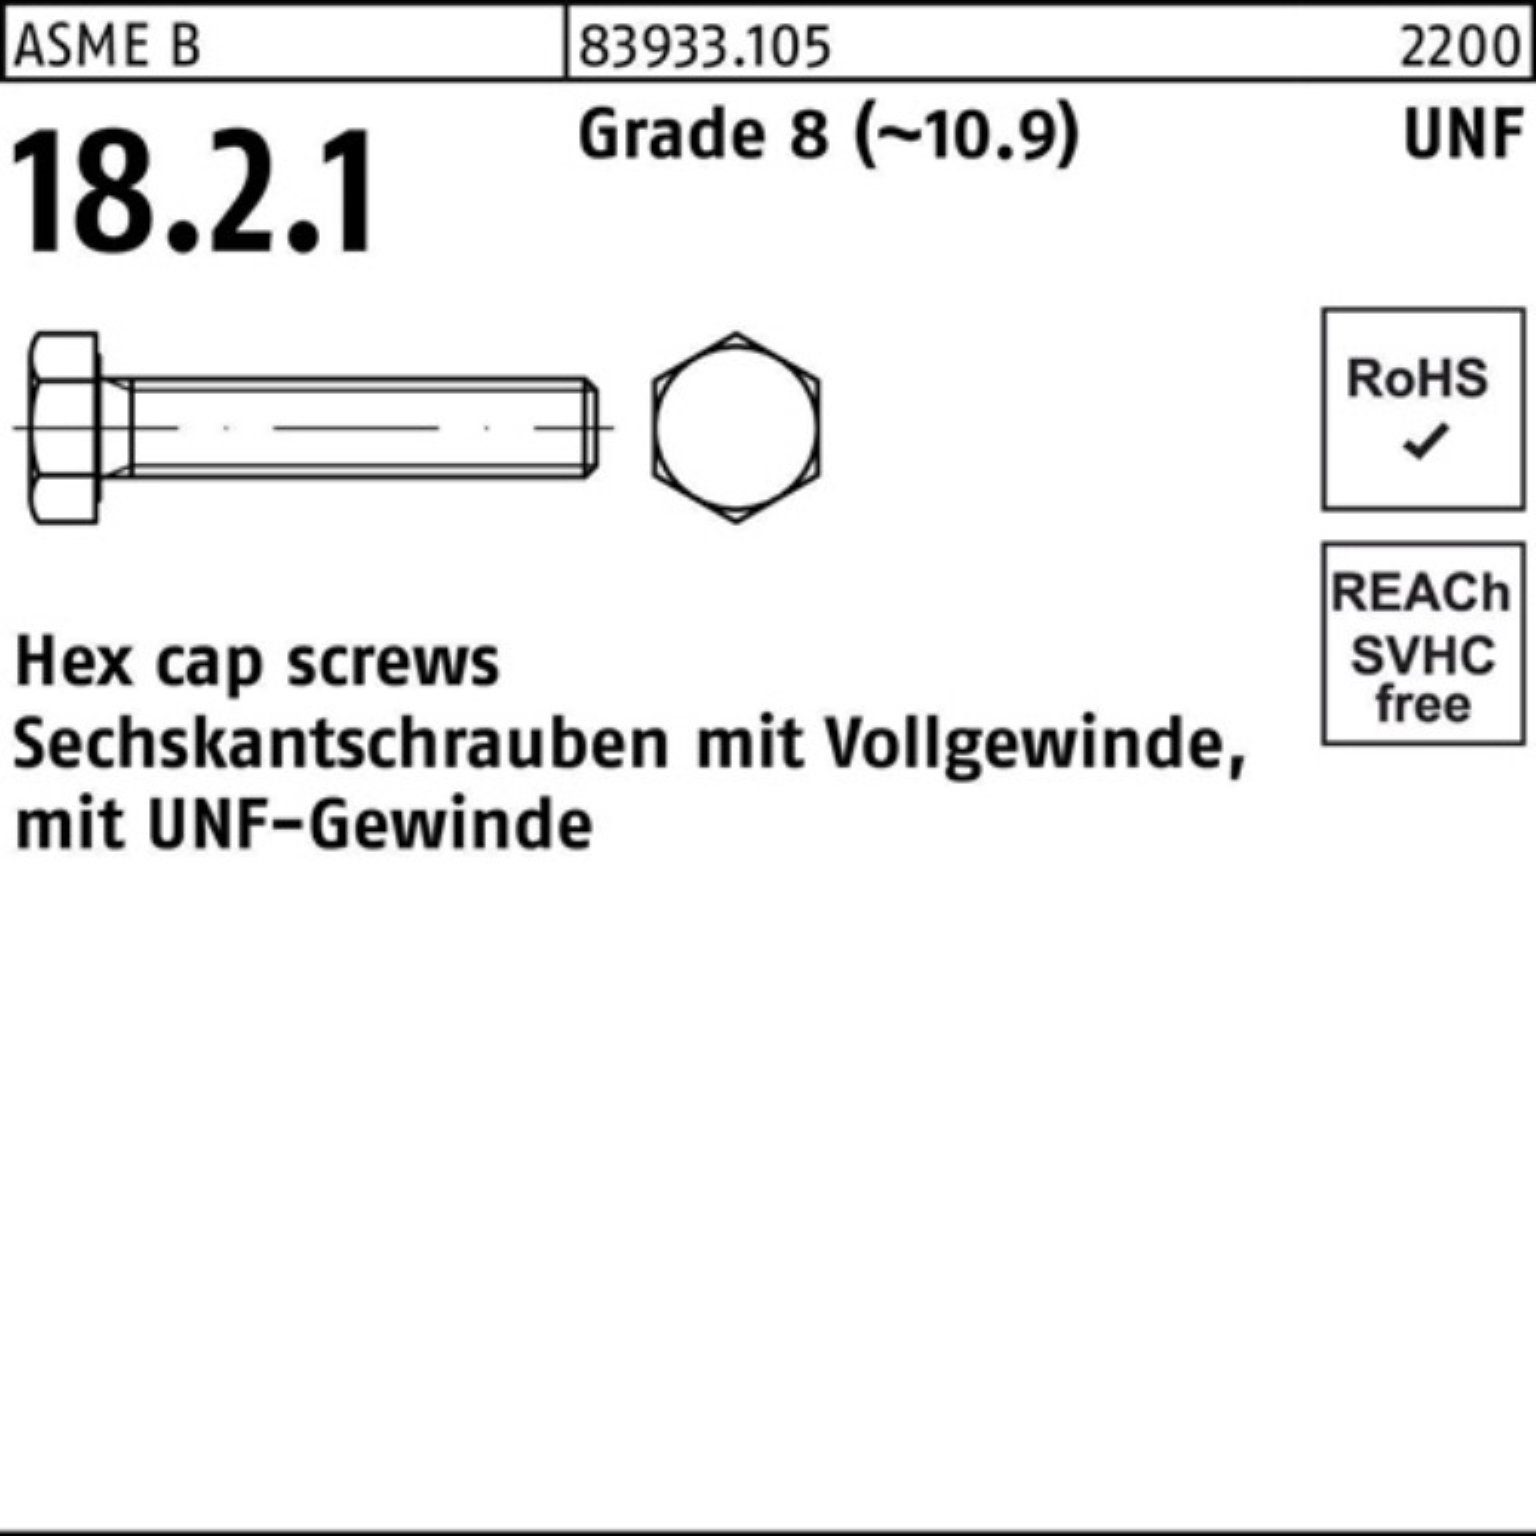 Reyher Sechskantschraube R Sechskantschraube Grade 1/4x 83933 UNF-Gewinde Pack VG 3/4 8 100er